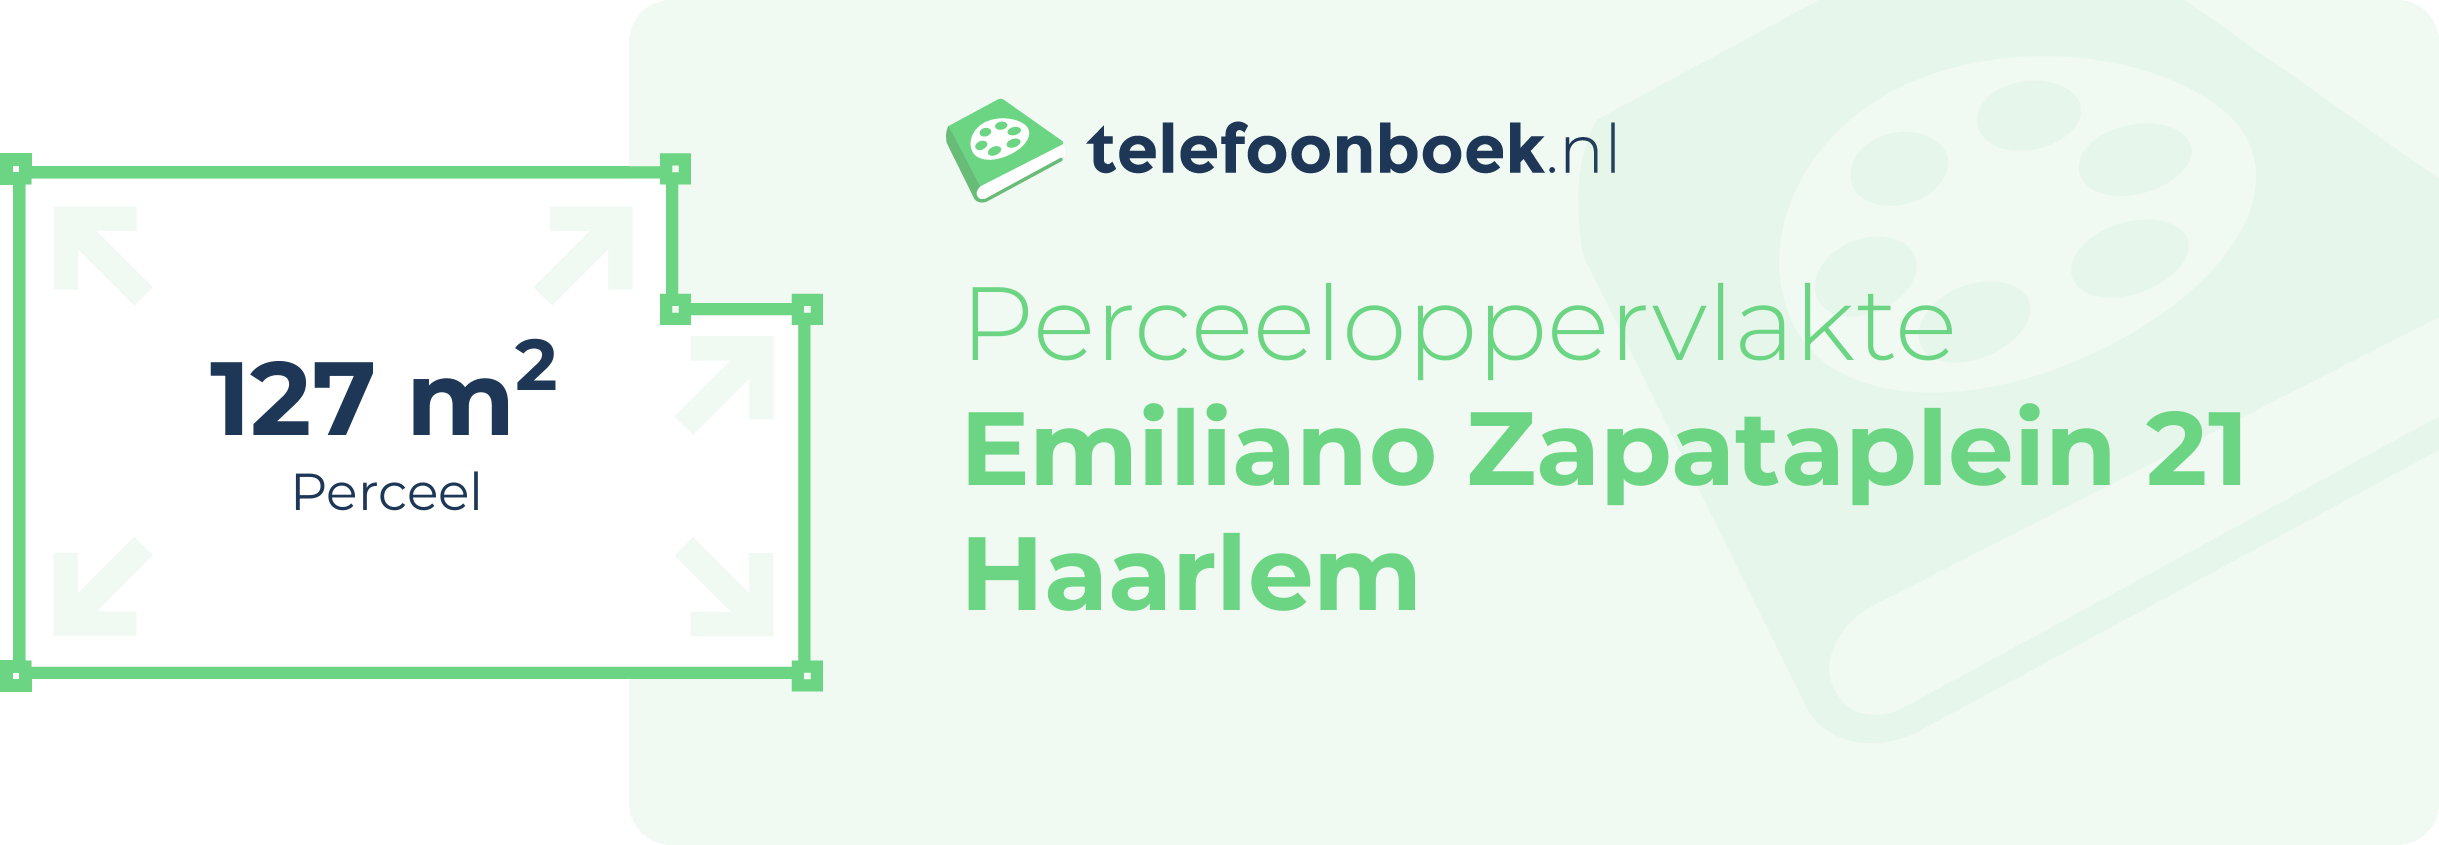 Perceeloppervlakte Emiliano Zapataplein 21 Haarlem